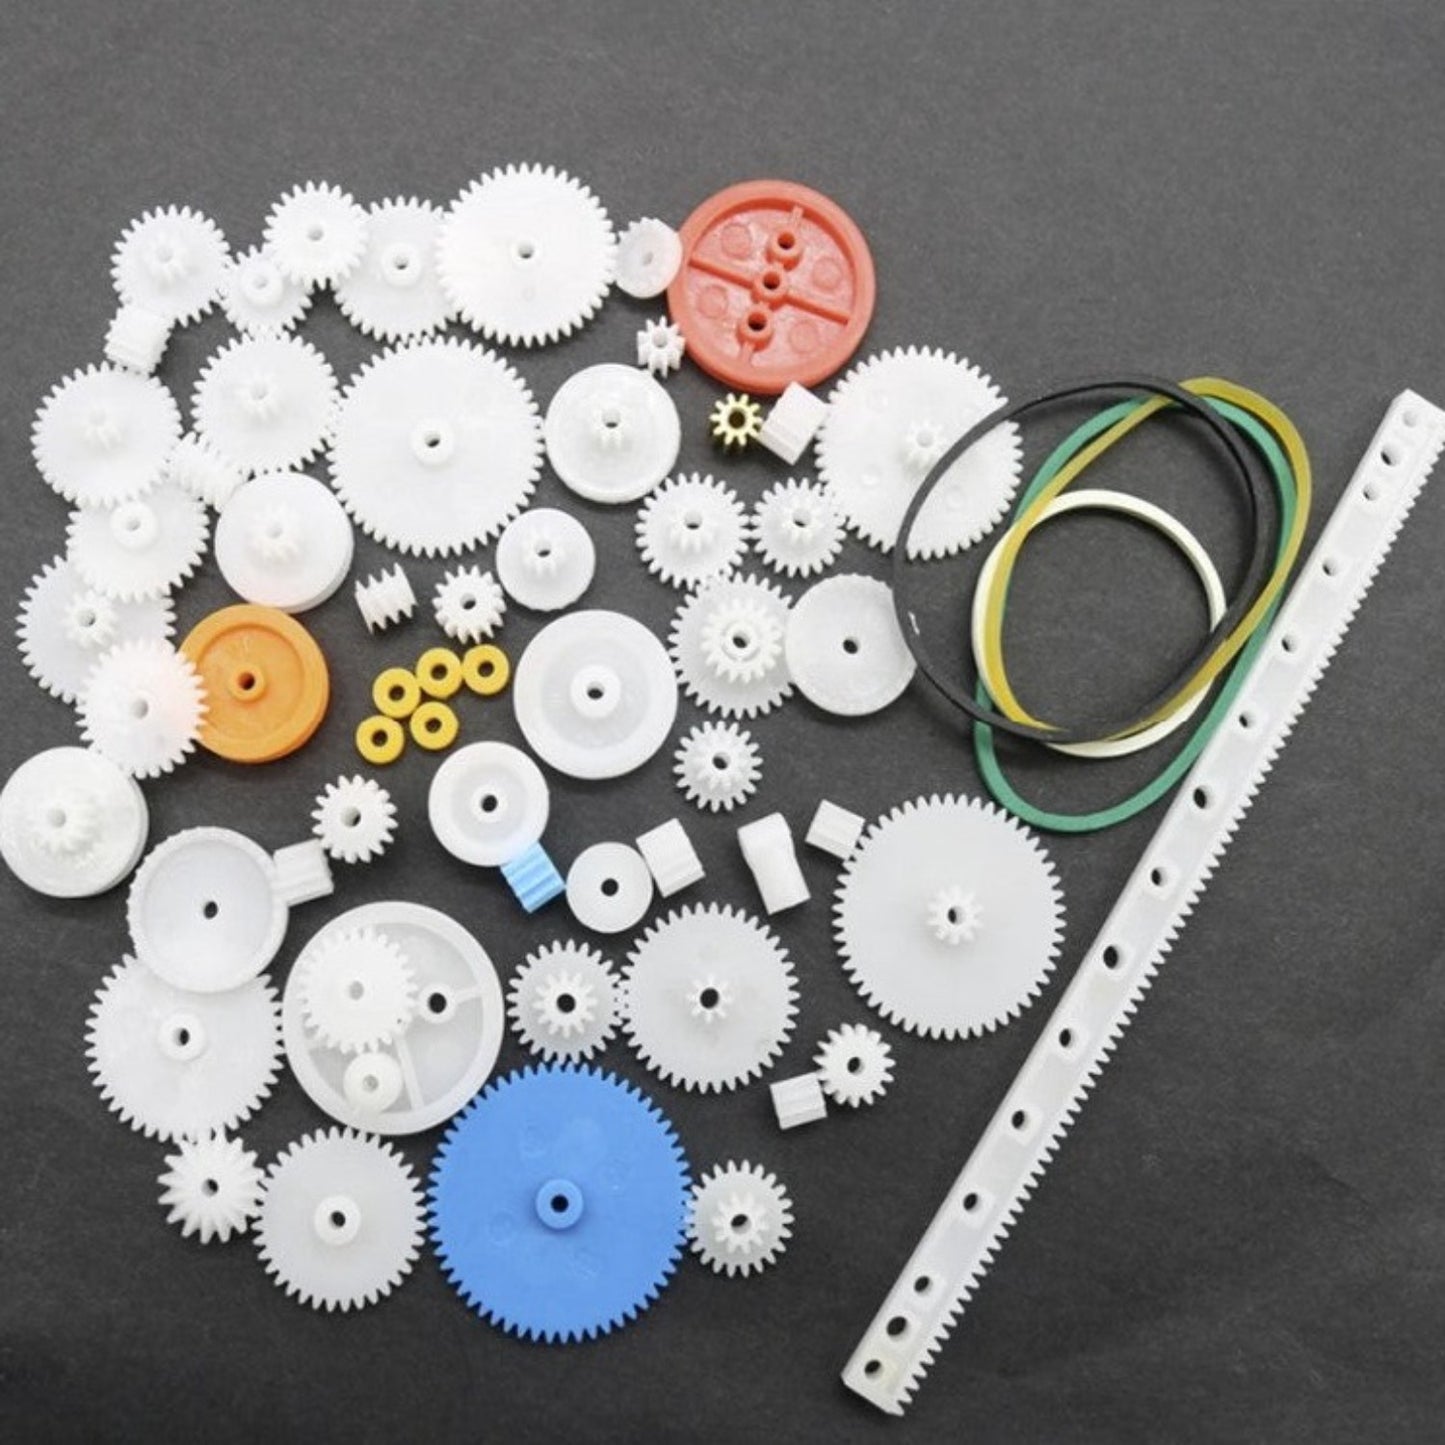 63pcs Kinds Hand DIY Toy Plastic Gear Kit Pulley Belt Shaft Robot Motor Bevel Set Worm Hobbies Slot Car Parts Accessories